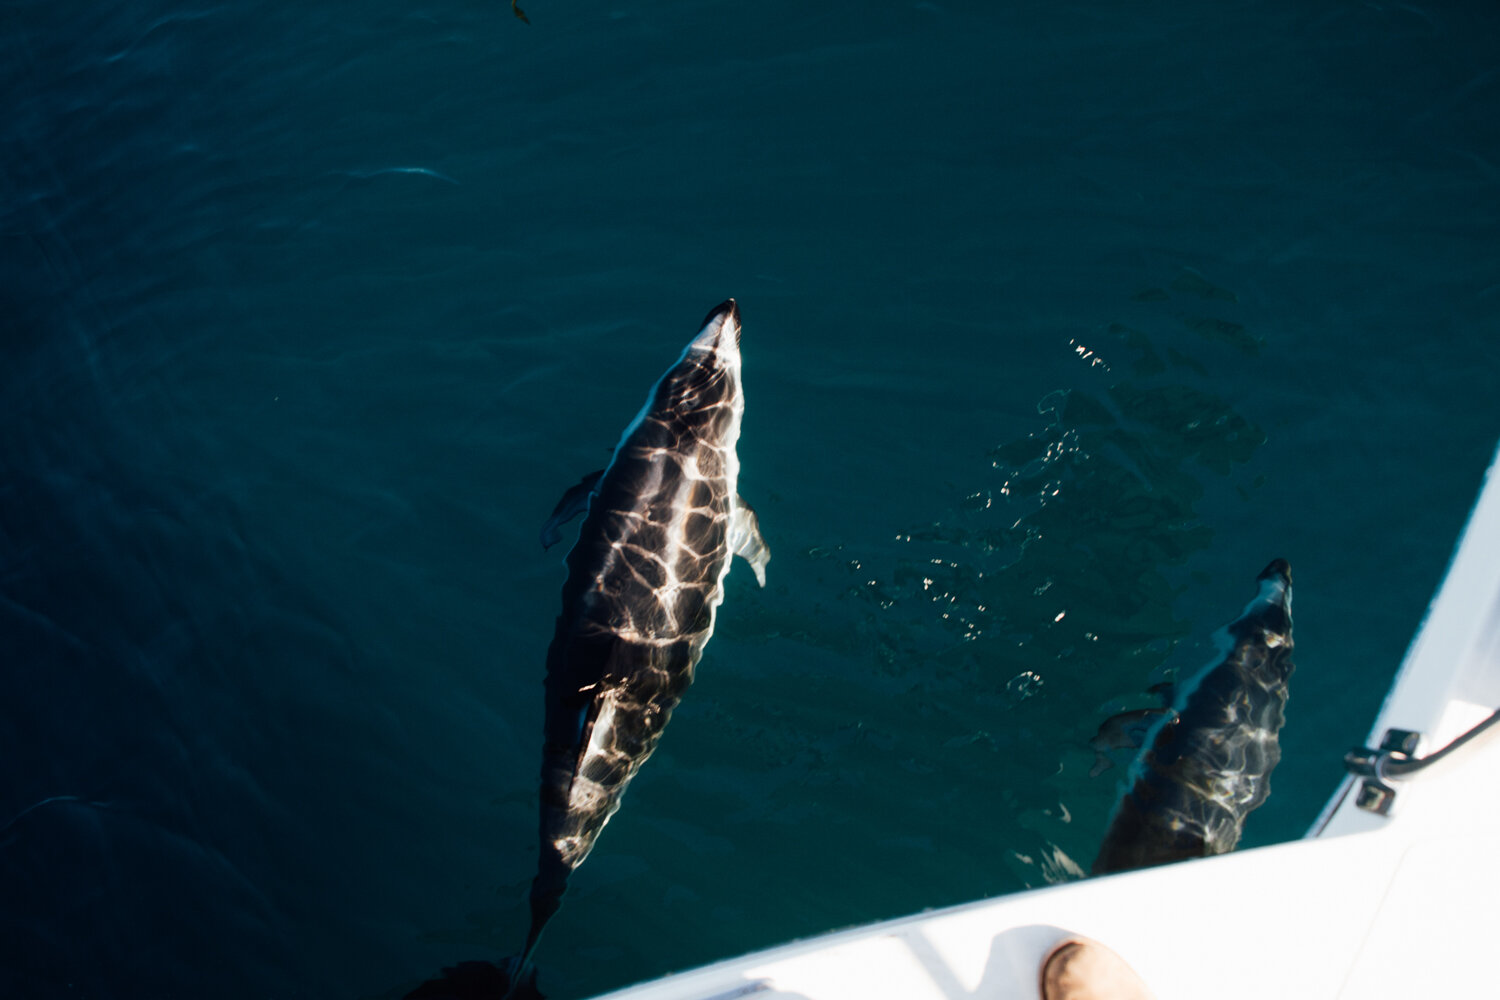 ocean defenders sea pacific krista espino volunteer nonprofit california photographer sealife dolphins dolphin boat organization15.jpg